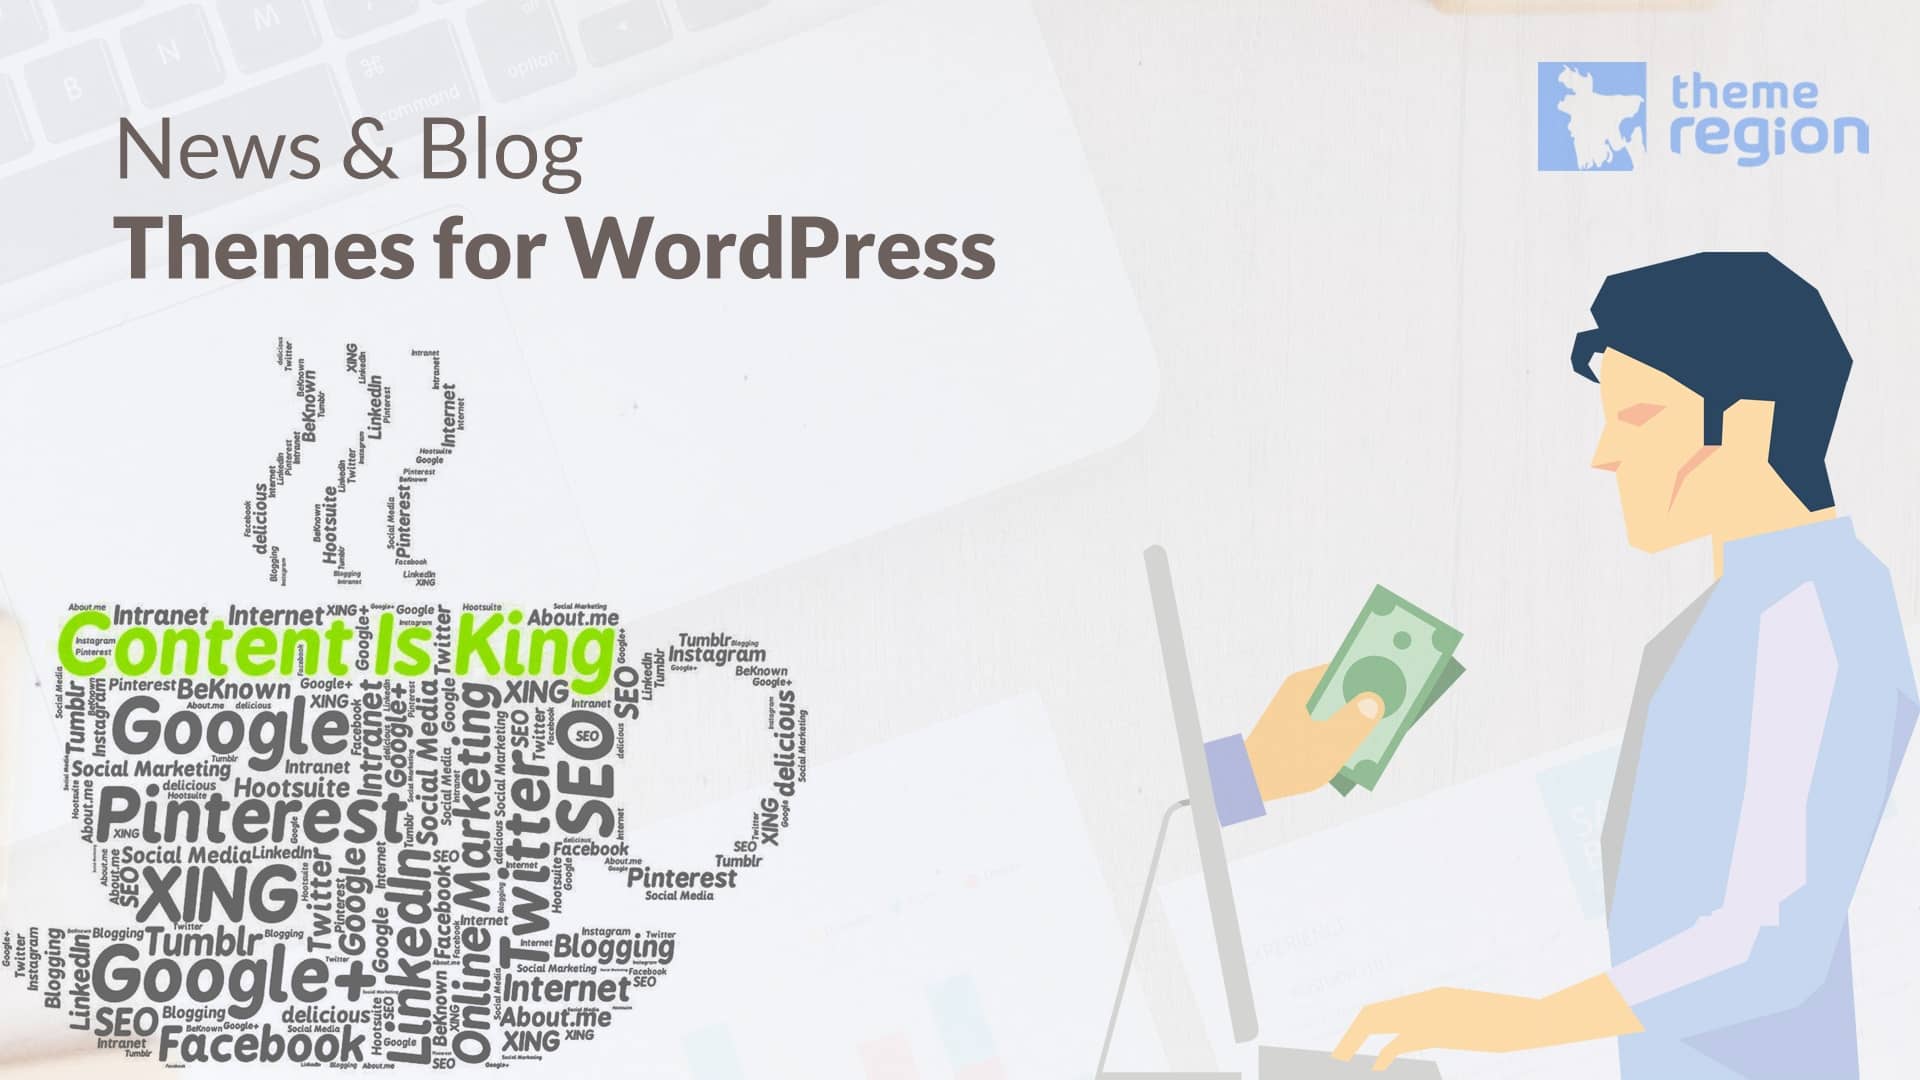 7 News Blog Themes for WordPress – 100% Money Makers